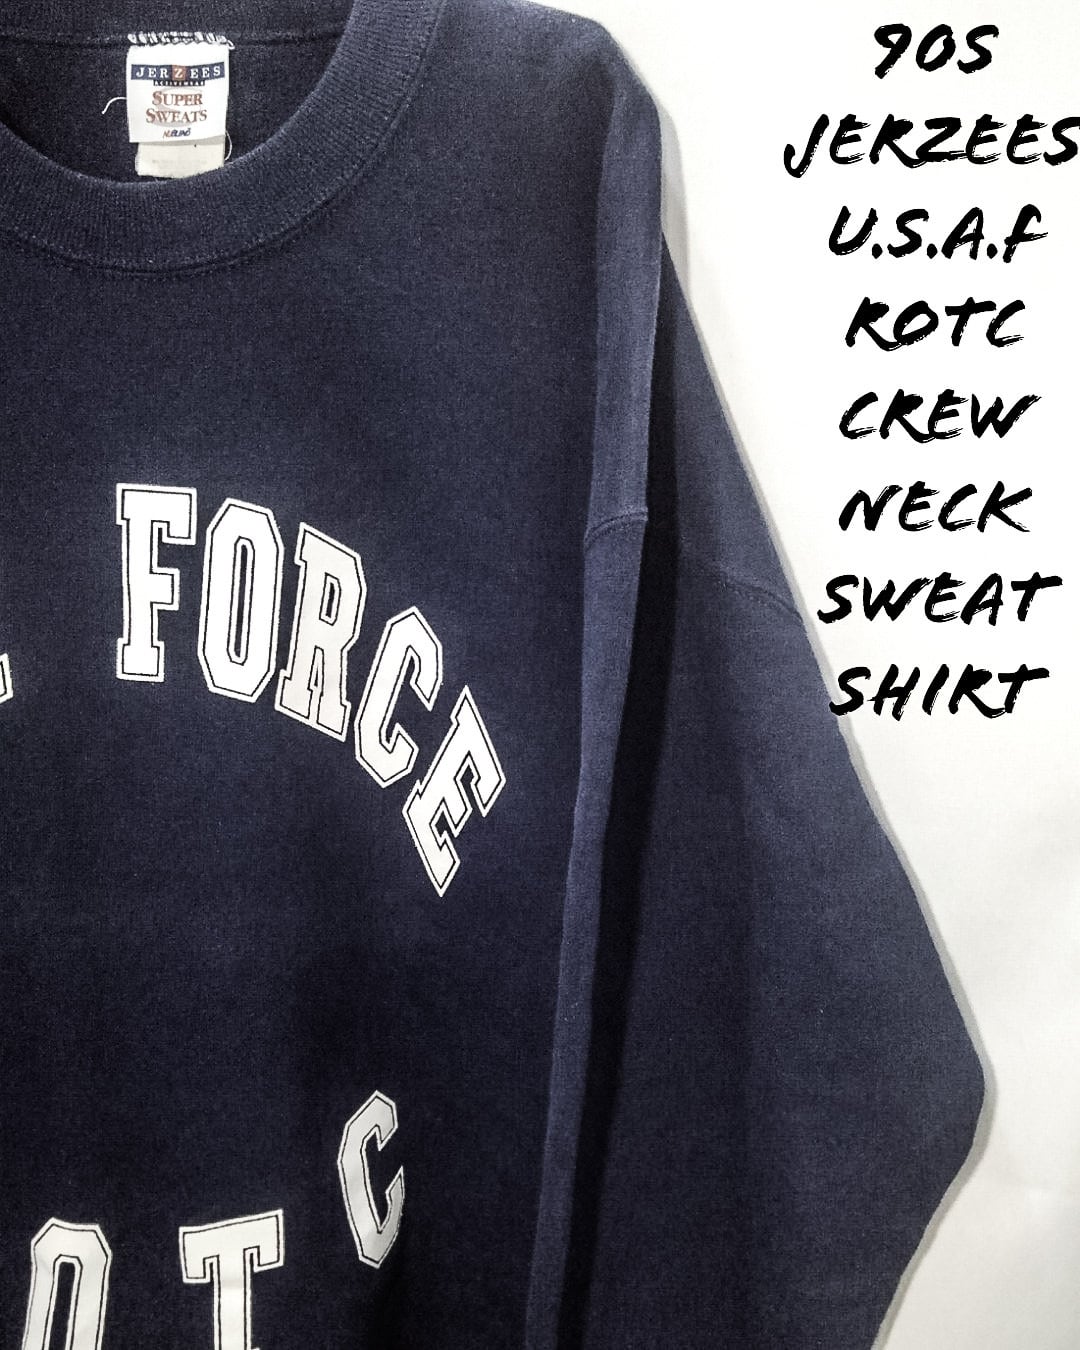 Vintage jerzees U.S.A.F ROTC crew neck sweat shirt 90s | 塚野製作所